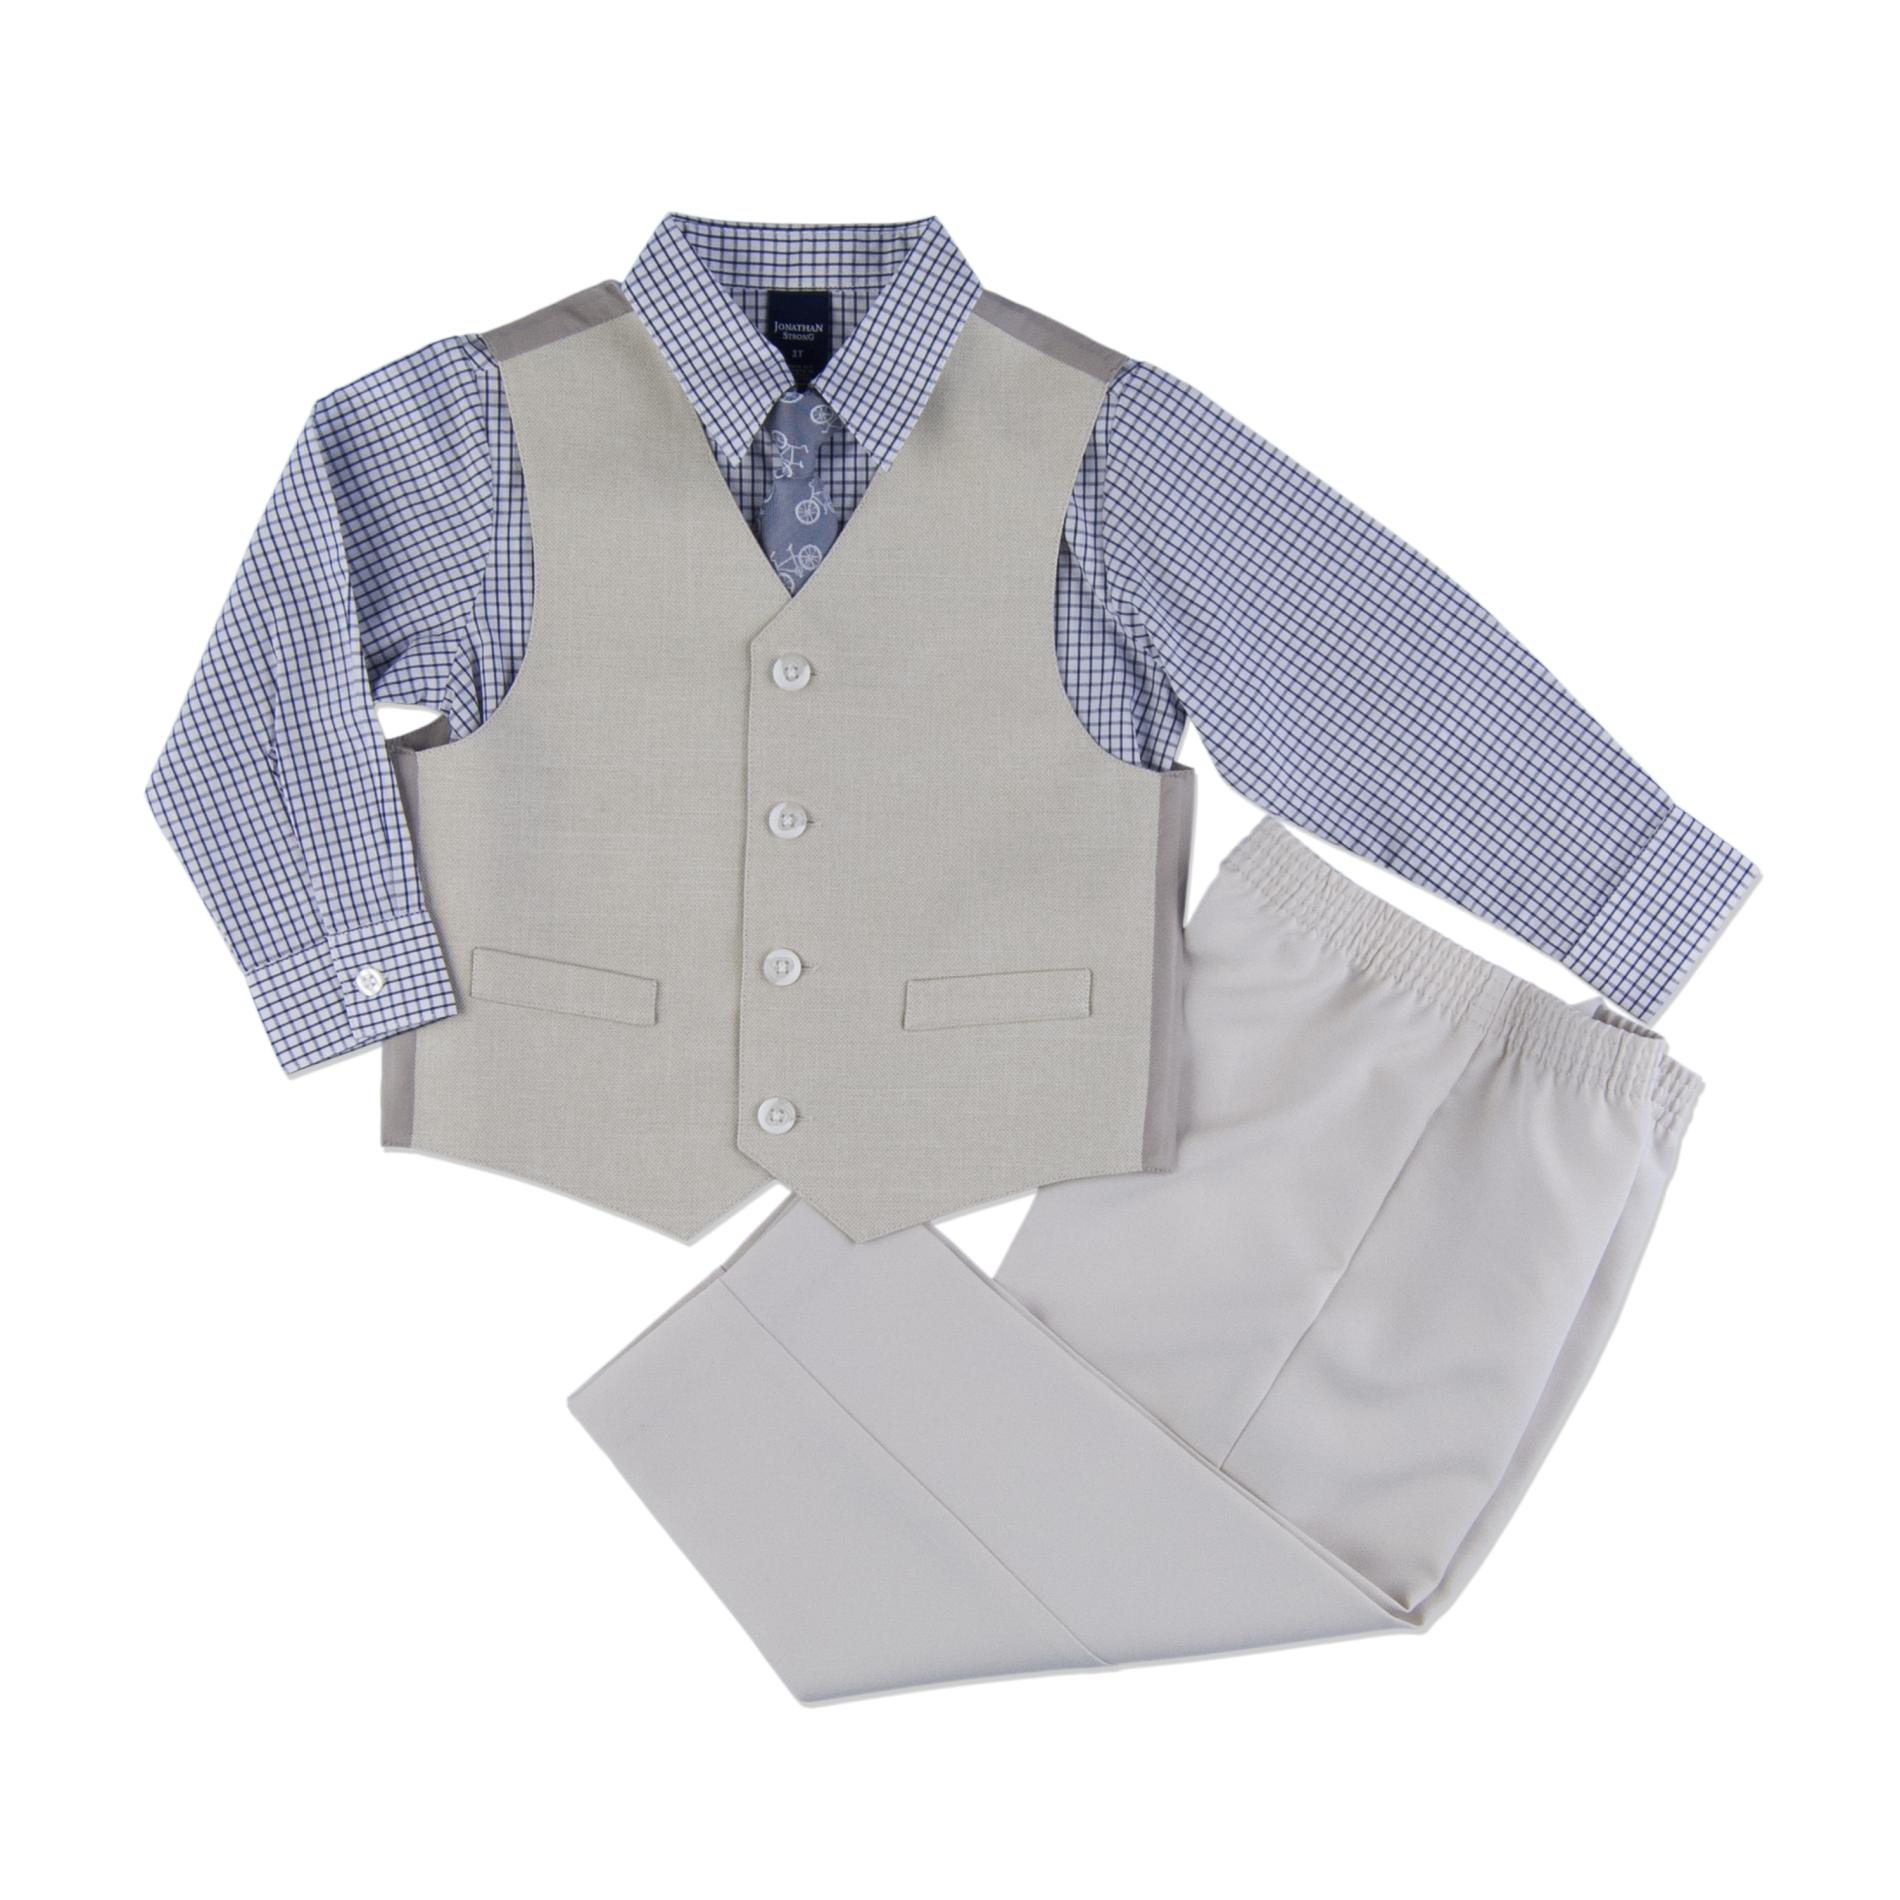 Jonathan Strong Infant & Toddler Boy's Dress Shirt  Vest & Pants Set - Check